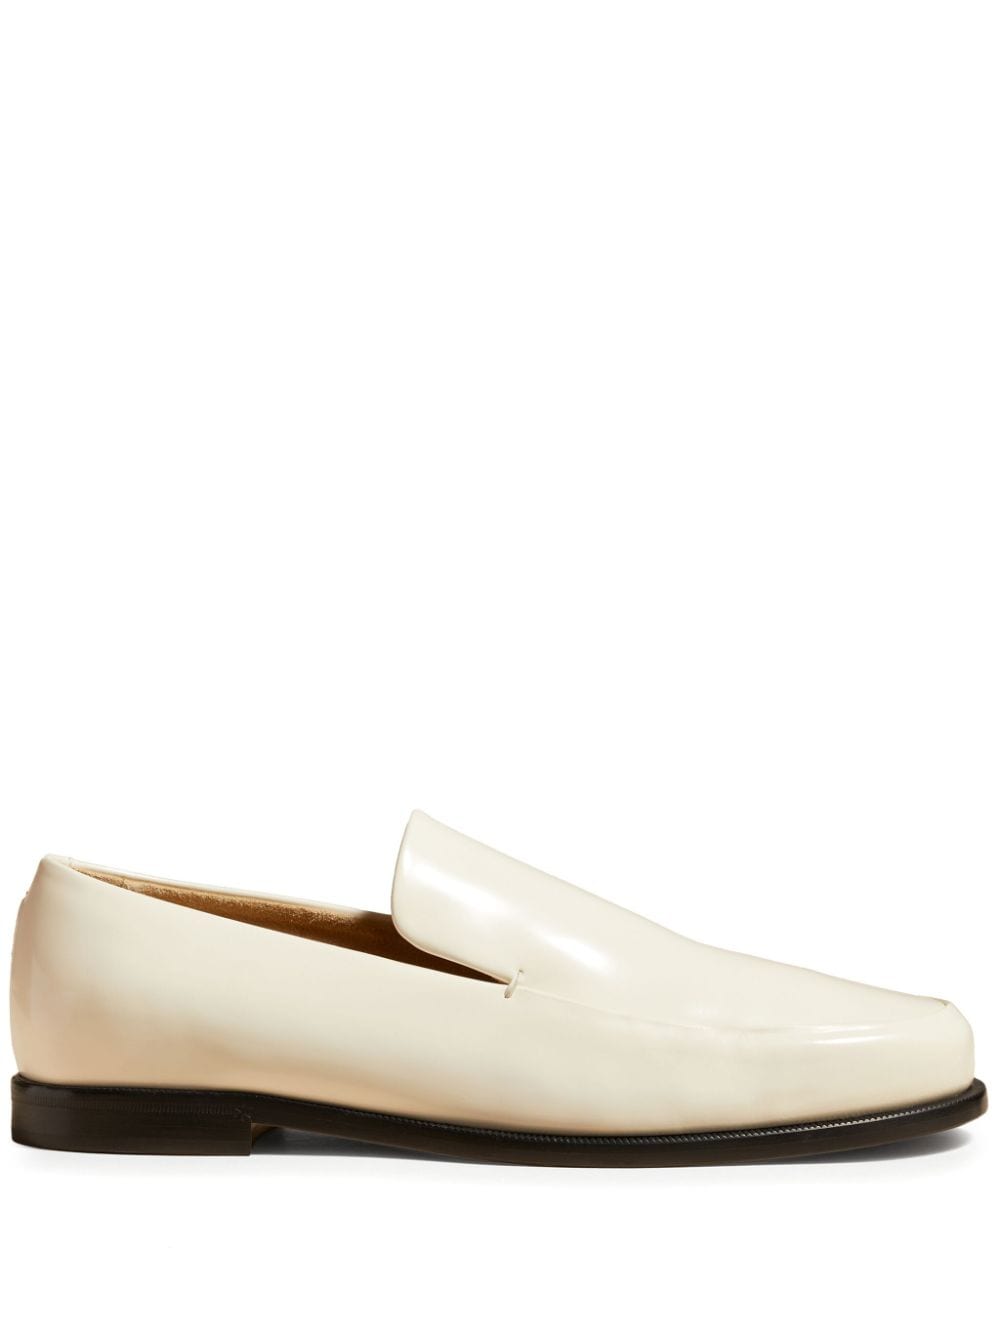 KHAITE Alessio leather loafers - White